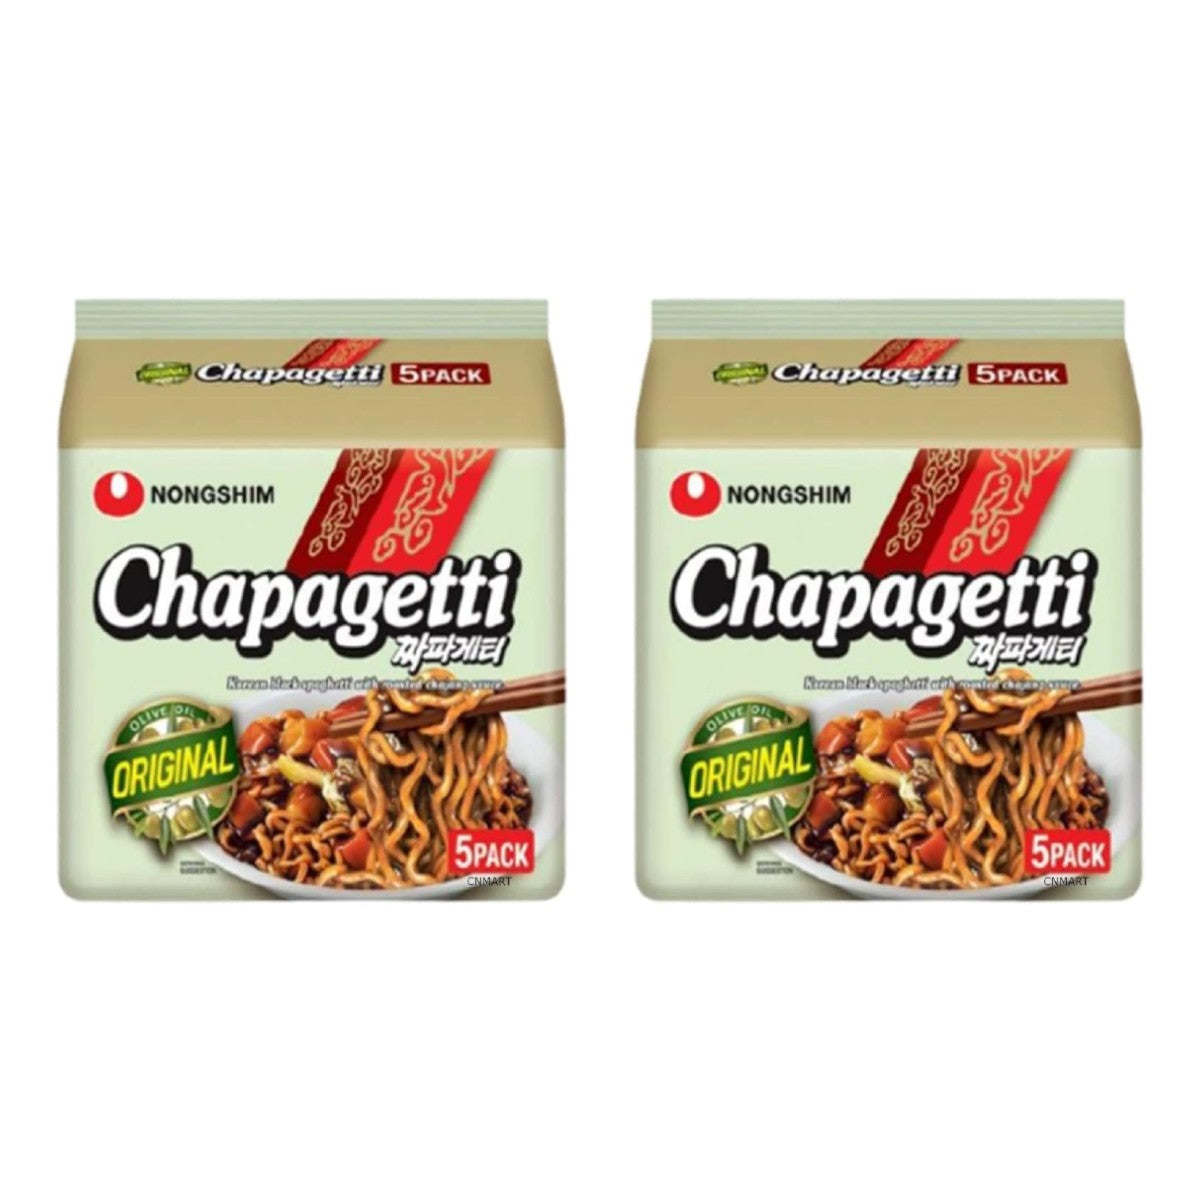 NONGSHIM Chapagetti Instant Noodles 140g